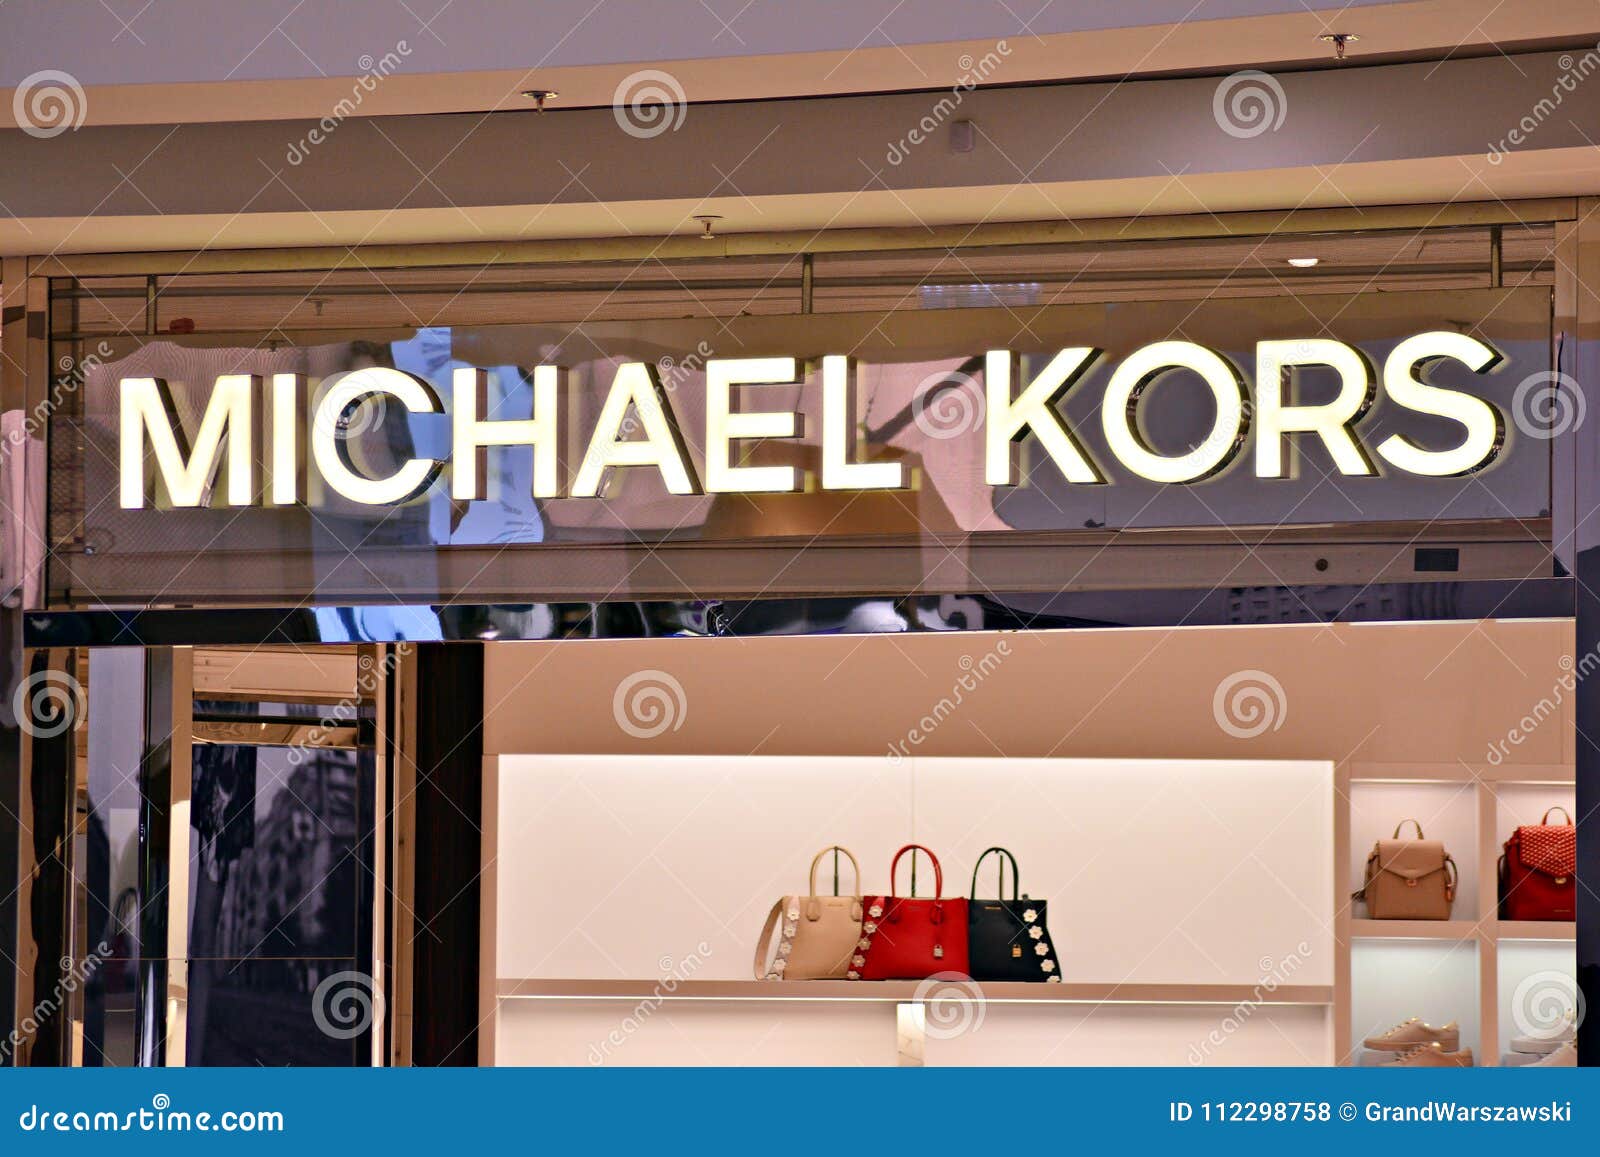 michael kors sold company